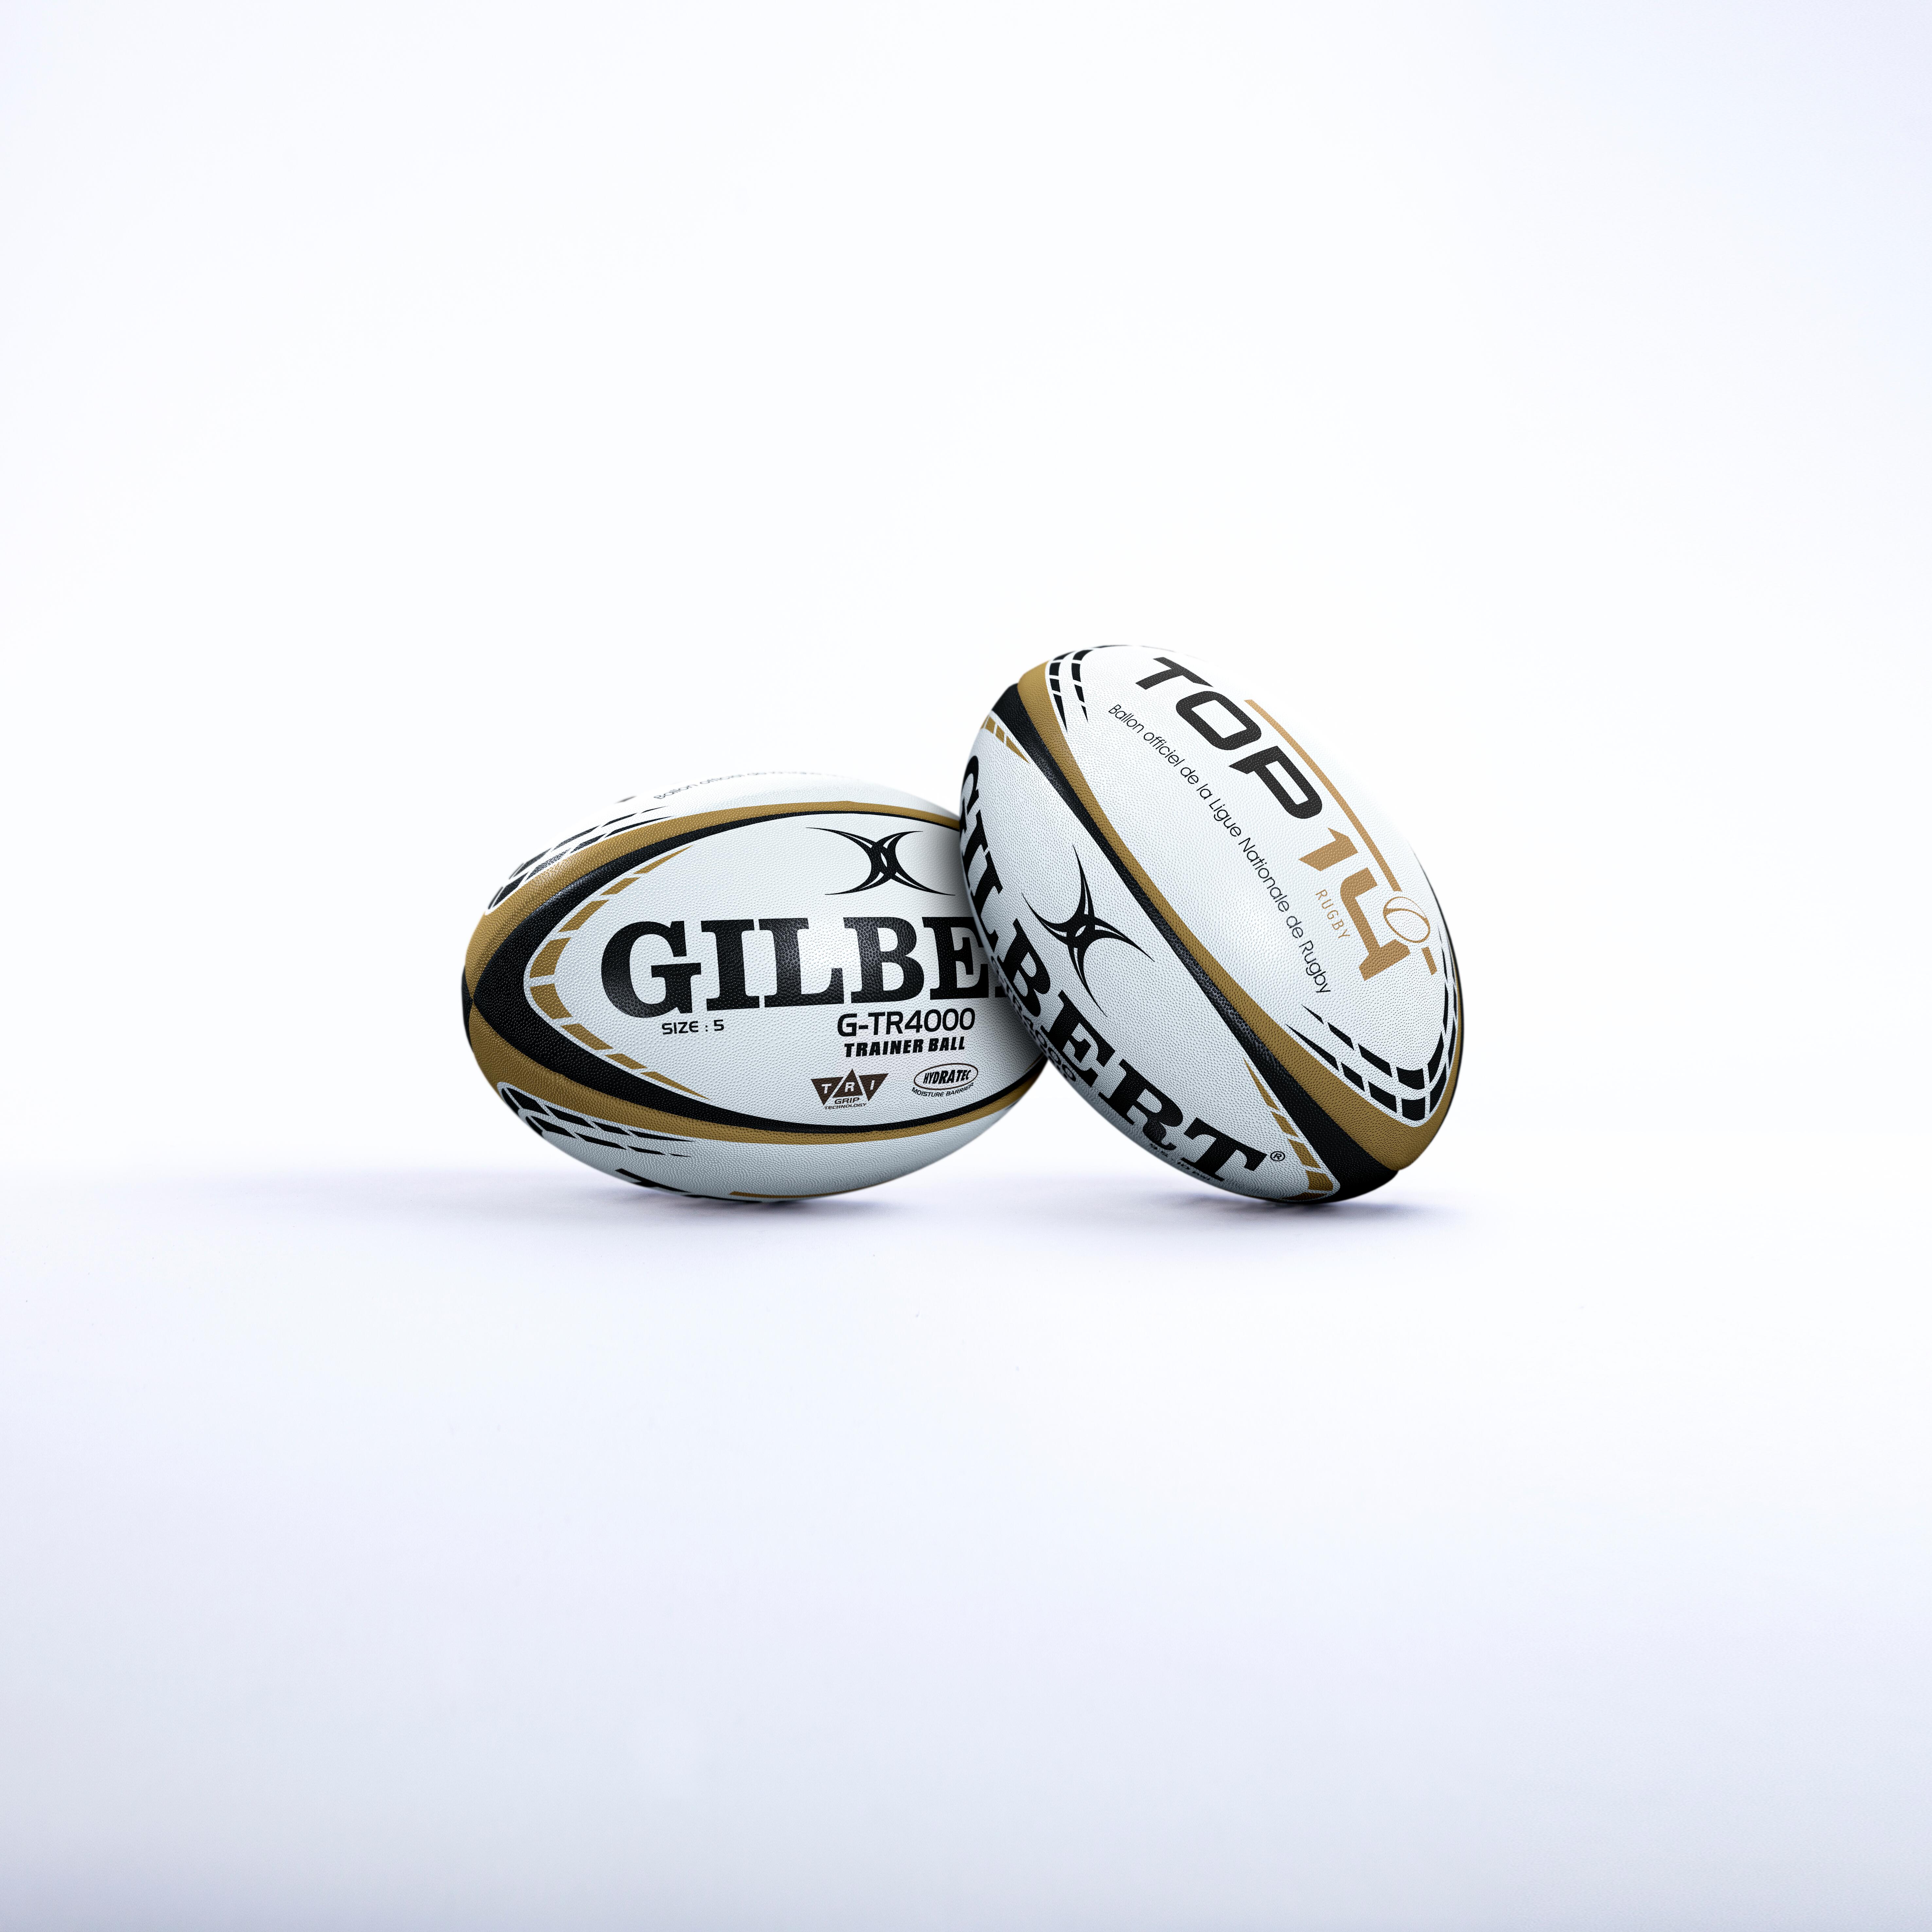 Minge Rugby GILBERT TOP 14 mărimea 5 alb-auriu Accesorii